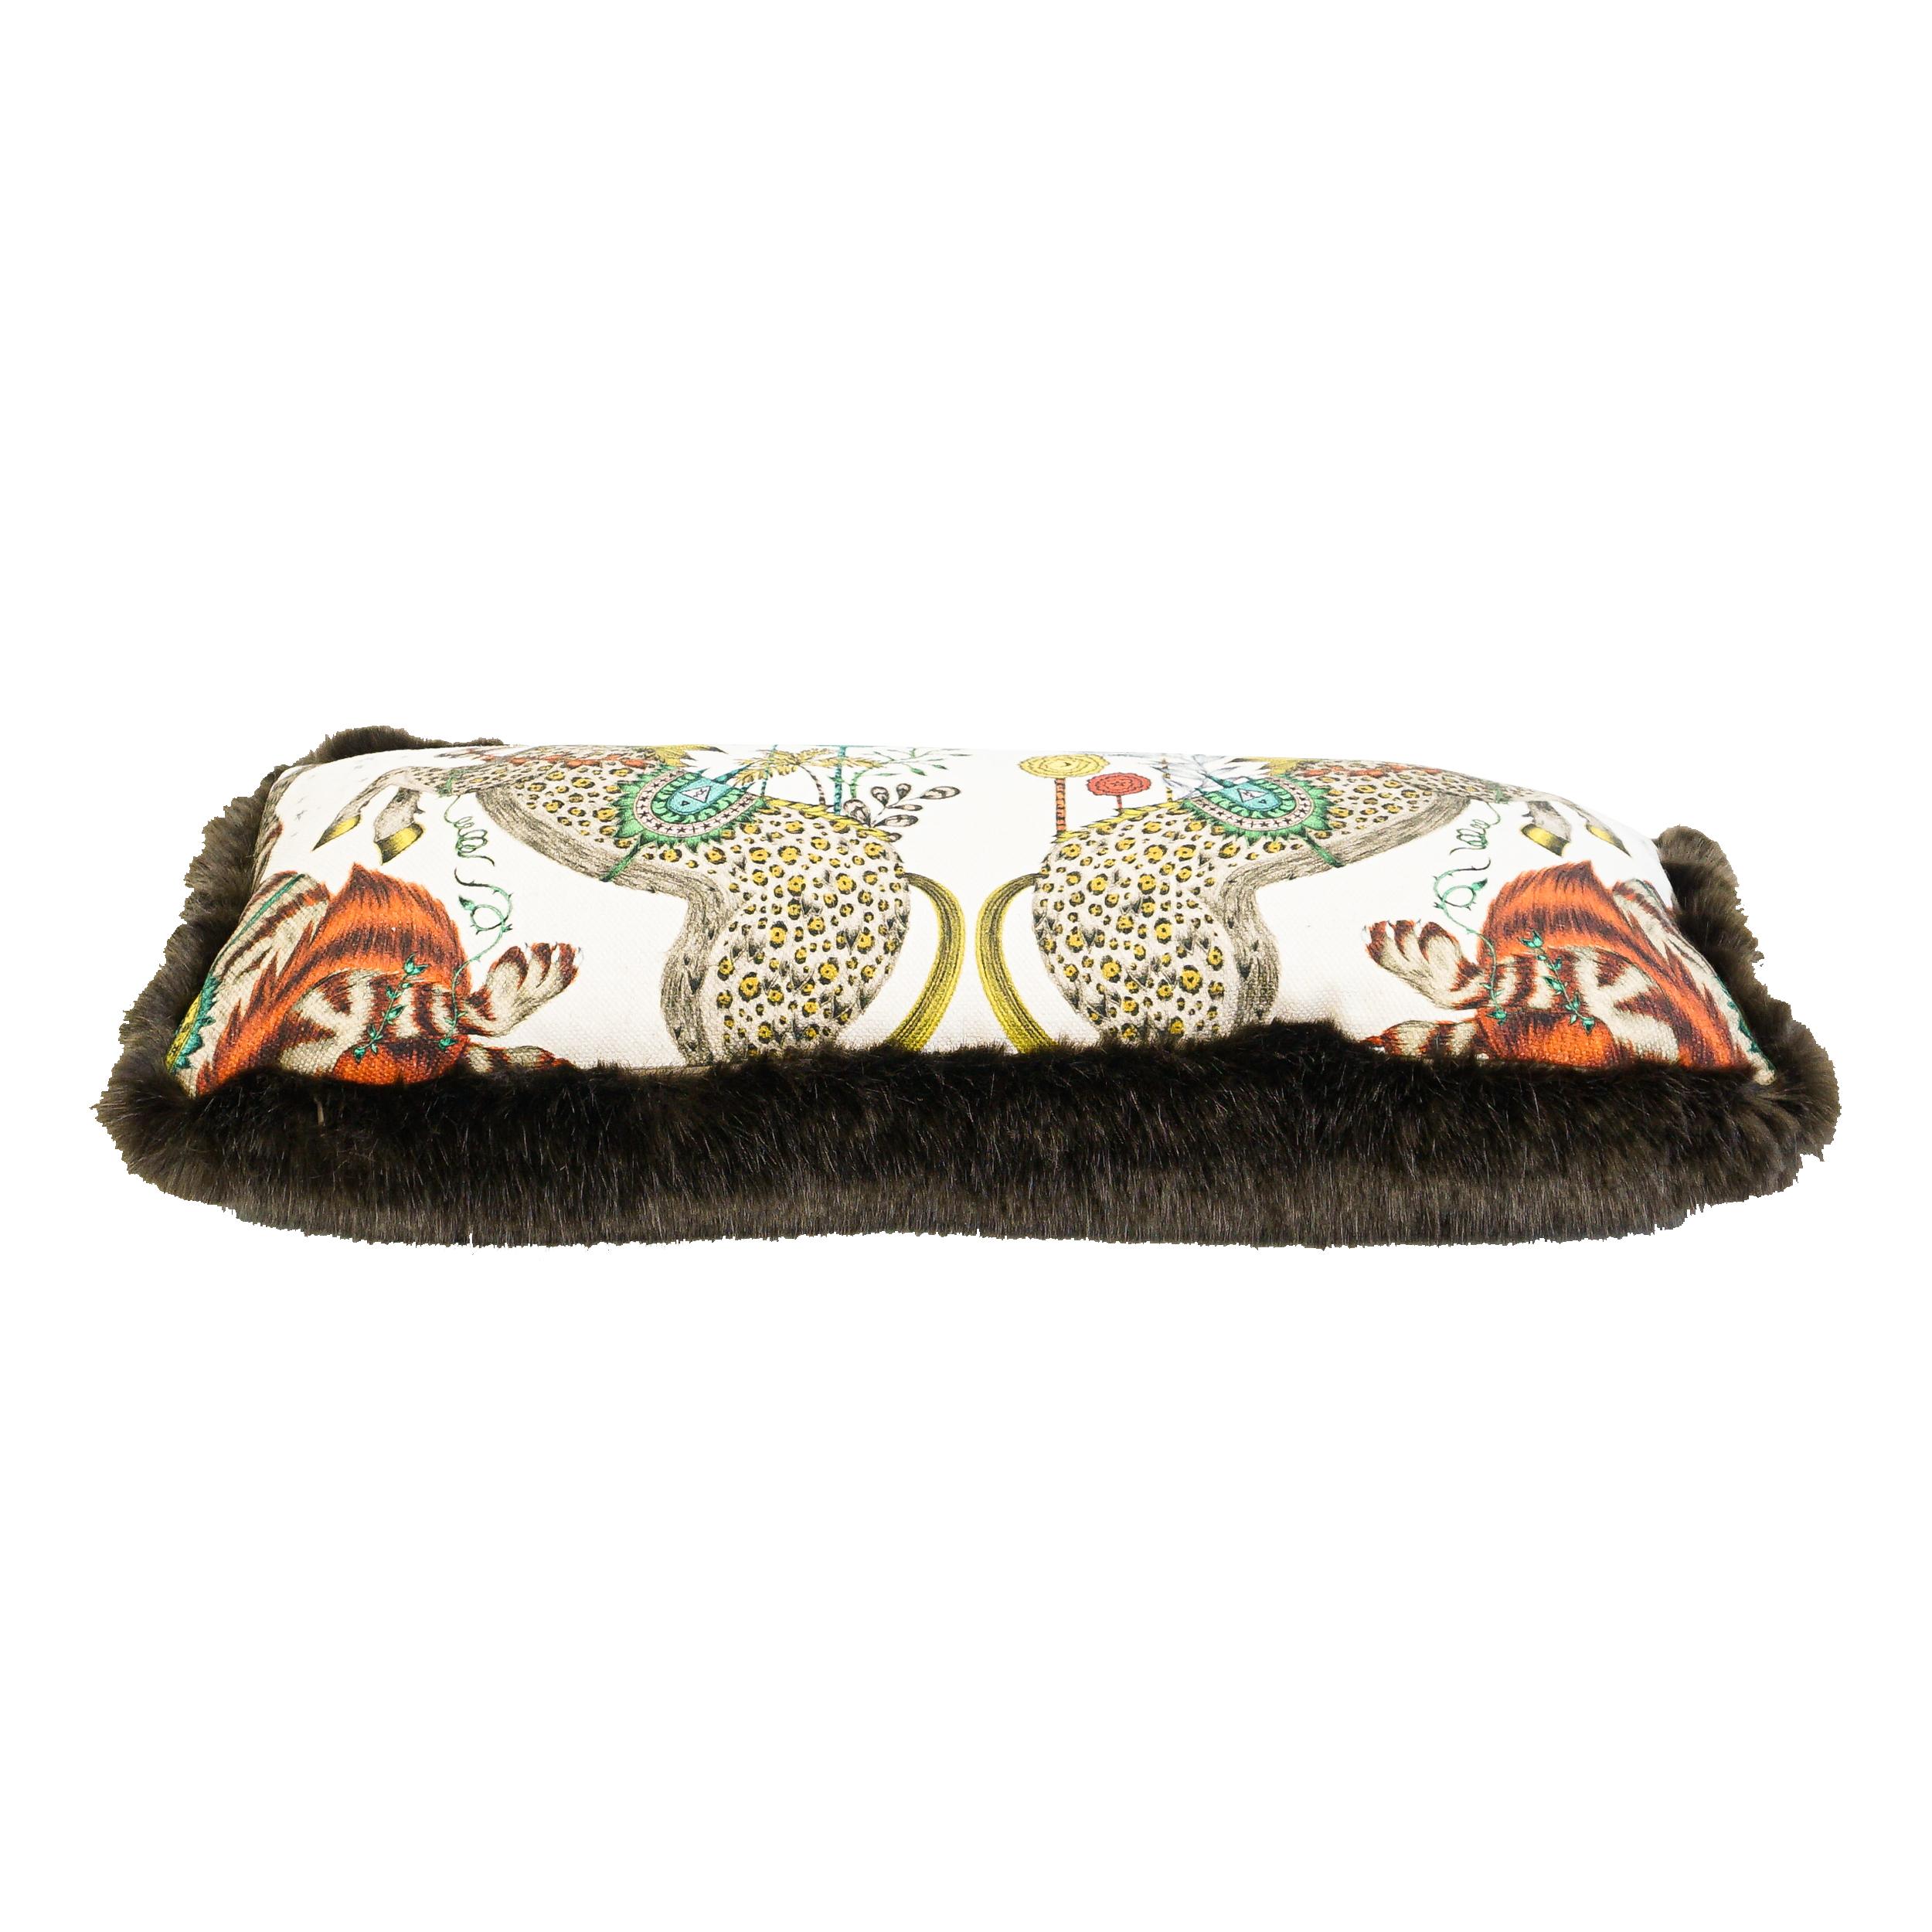 Fantastical Leopard Unicorn Lumbar Pillows with Faux Fur For Sale 8